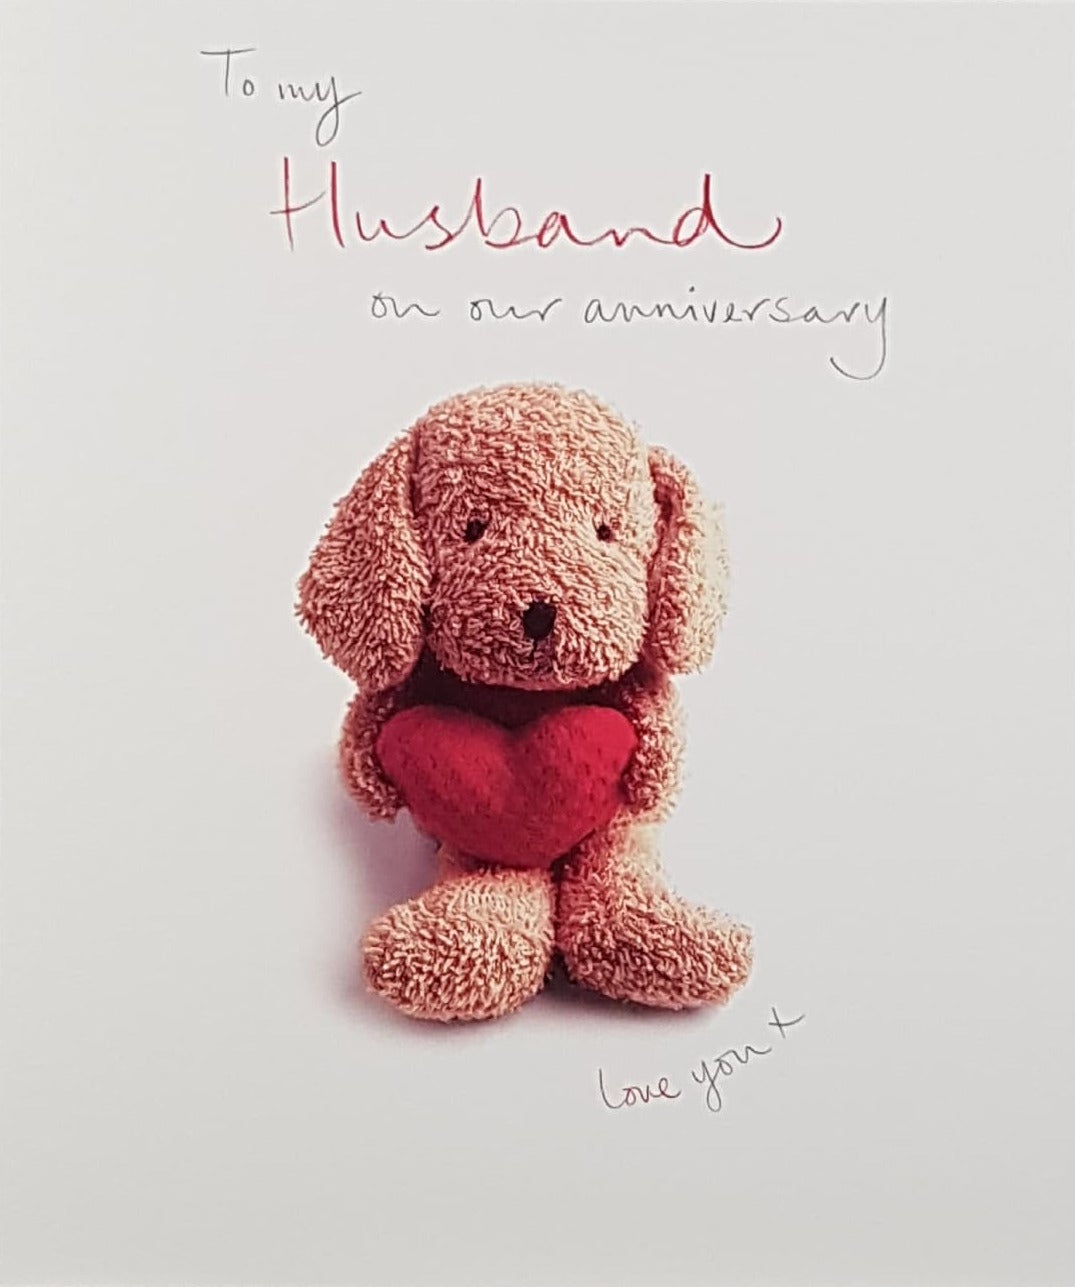 Anniversary Card - Husband / A Cute Teddy Puppy Holding A Heart